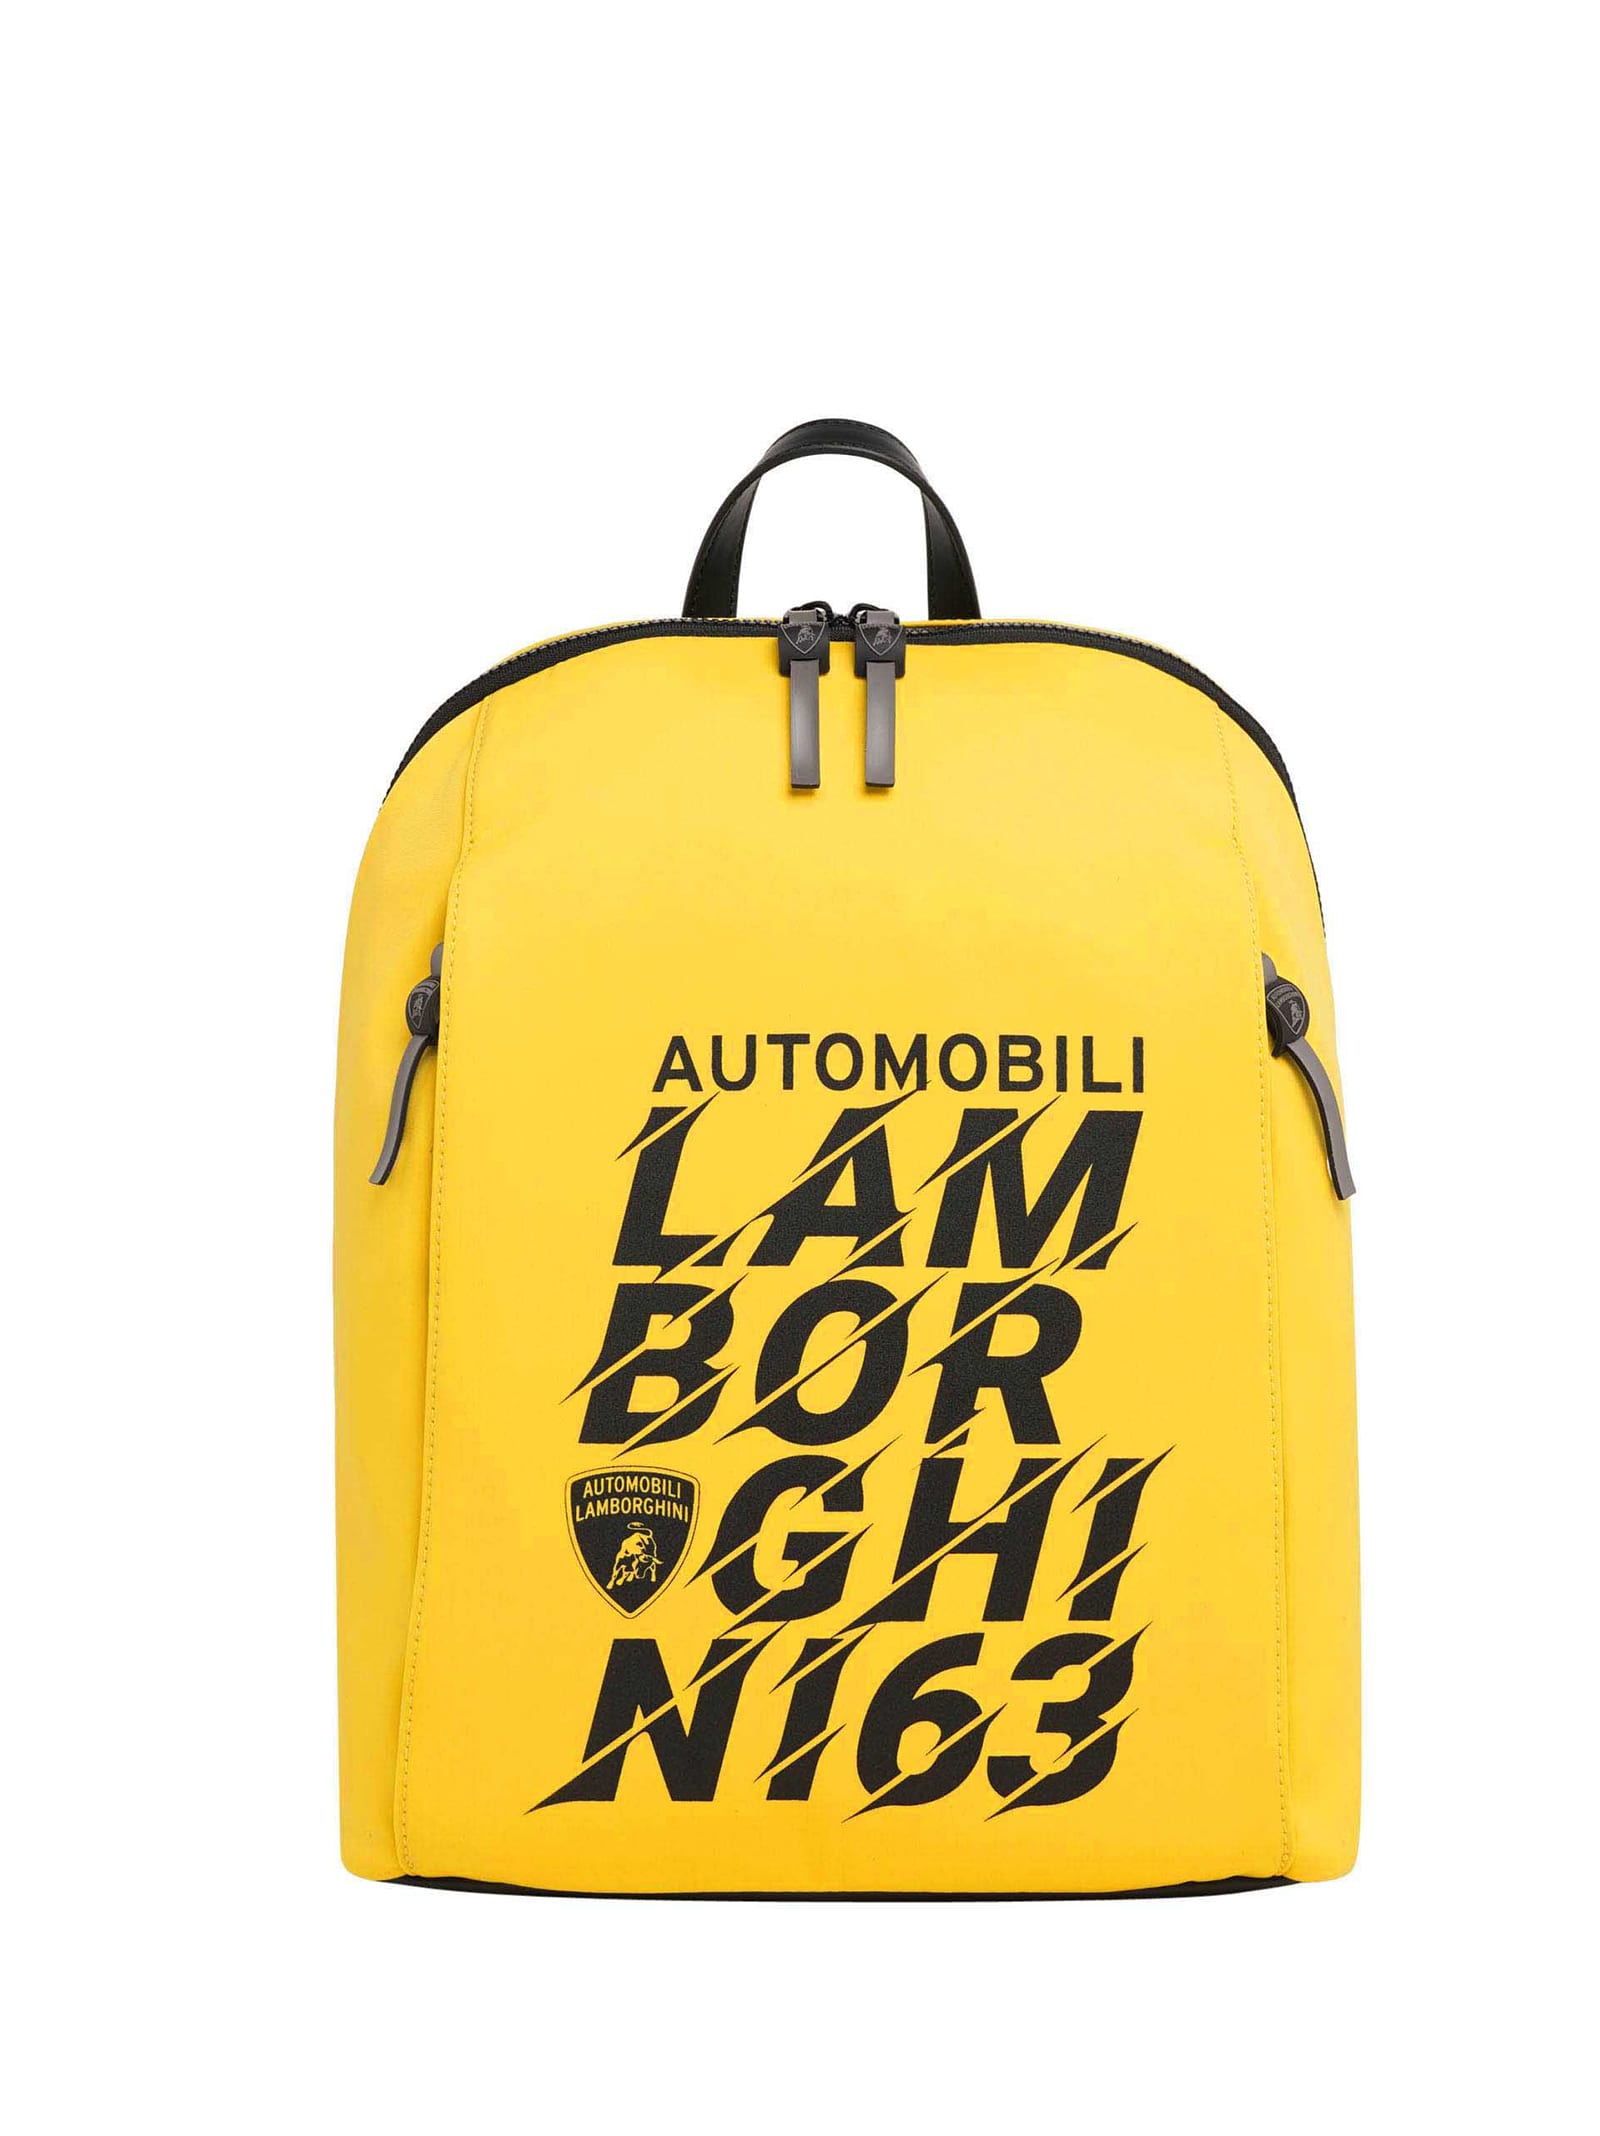 Automobili Lamborghini Yellow Backpack